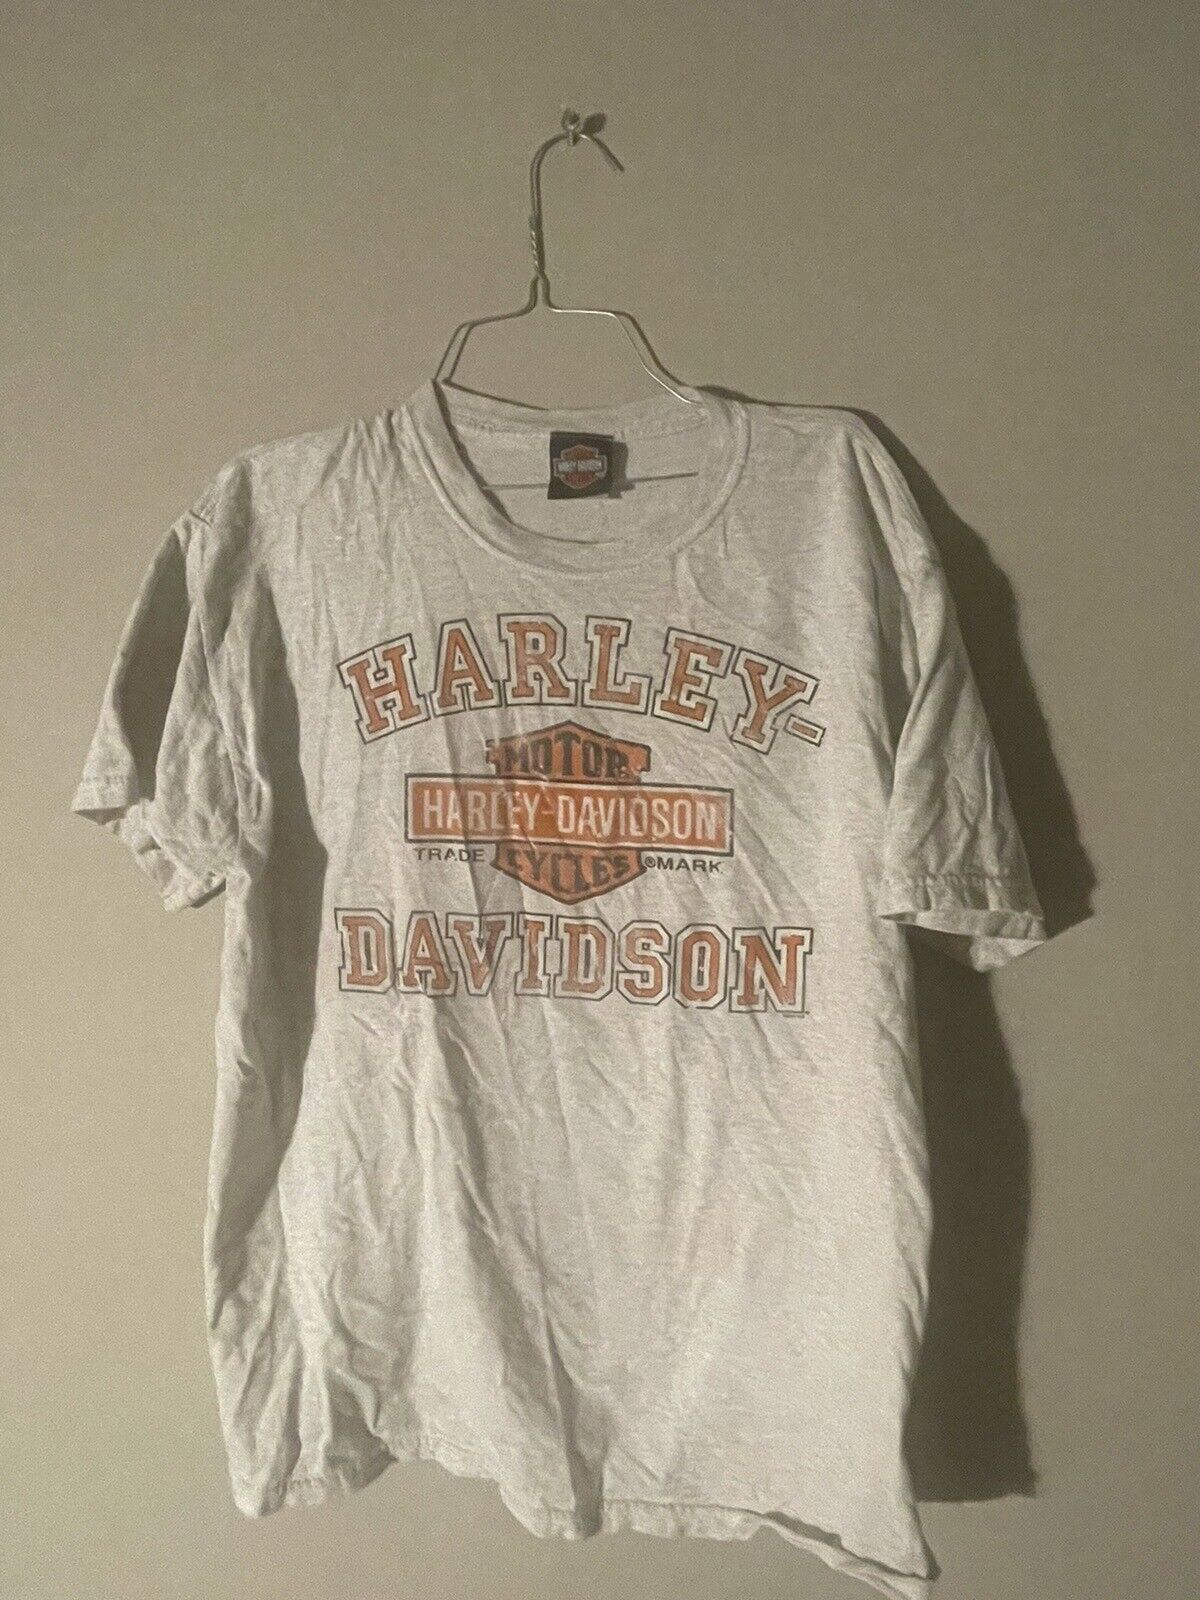 2009 Harley Davidson T Shirt Savannah Georgia Worn Distressed Look Biker Size L